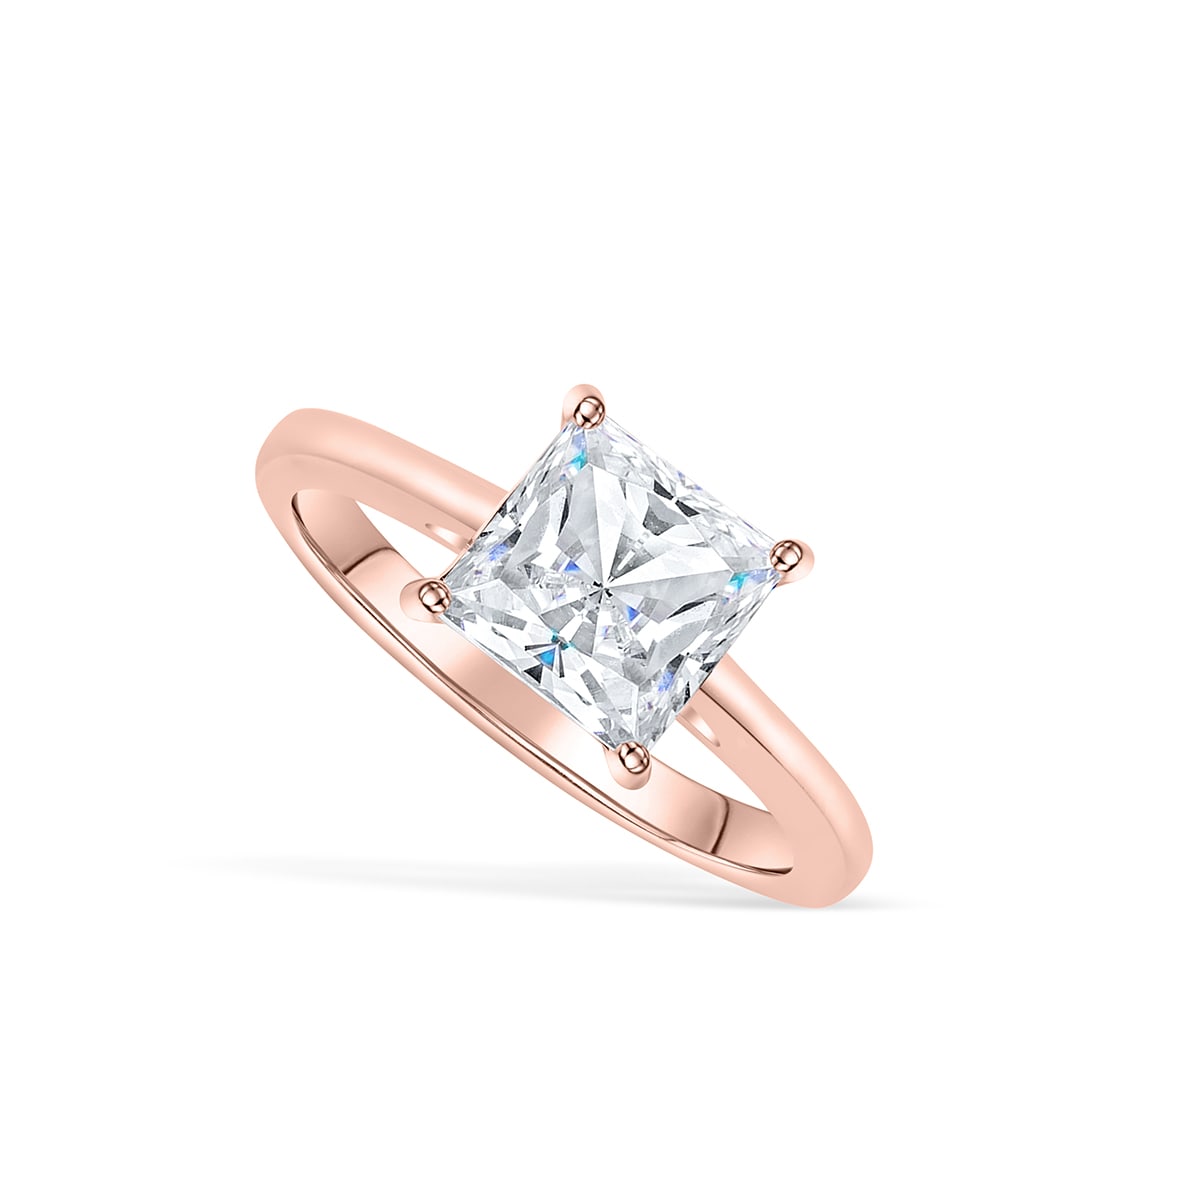 the olivia rose gold princess cut engagement ring